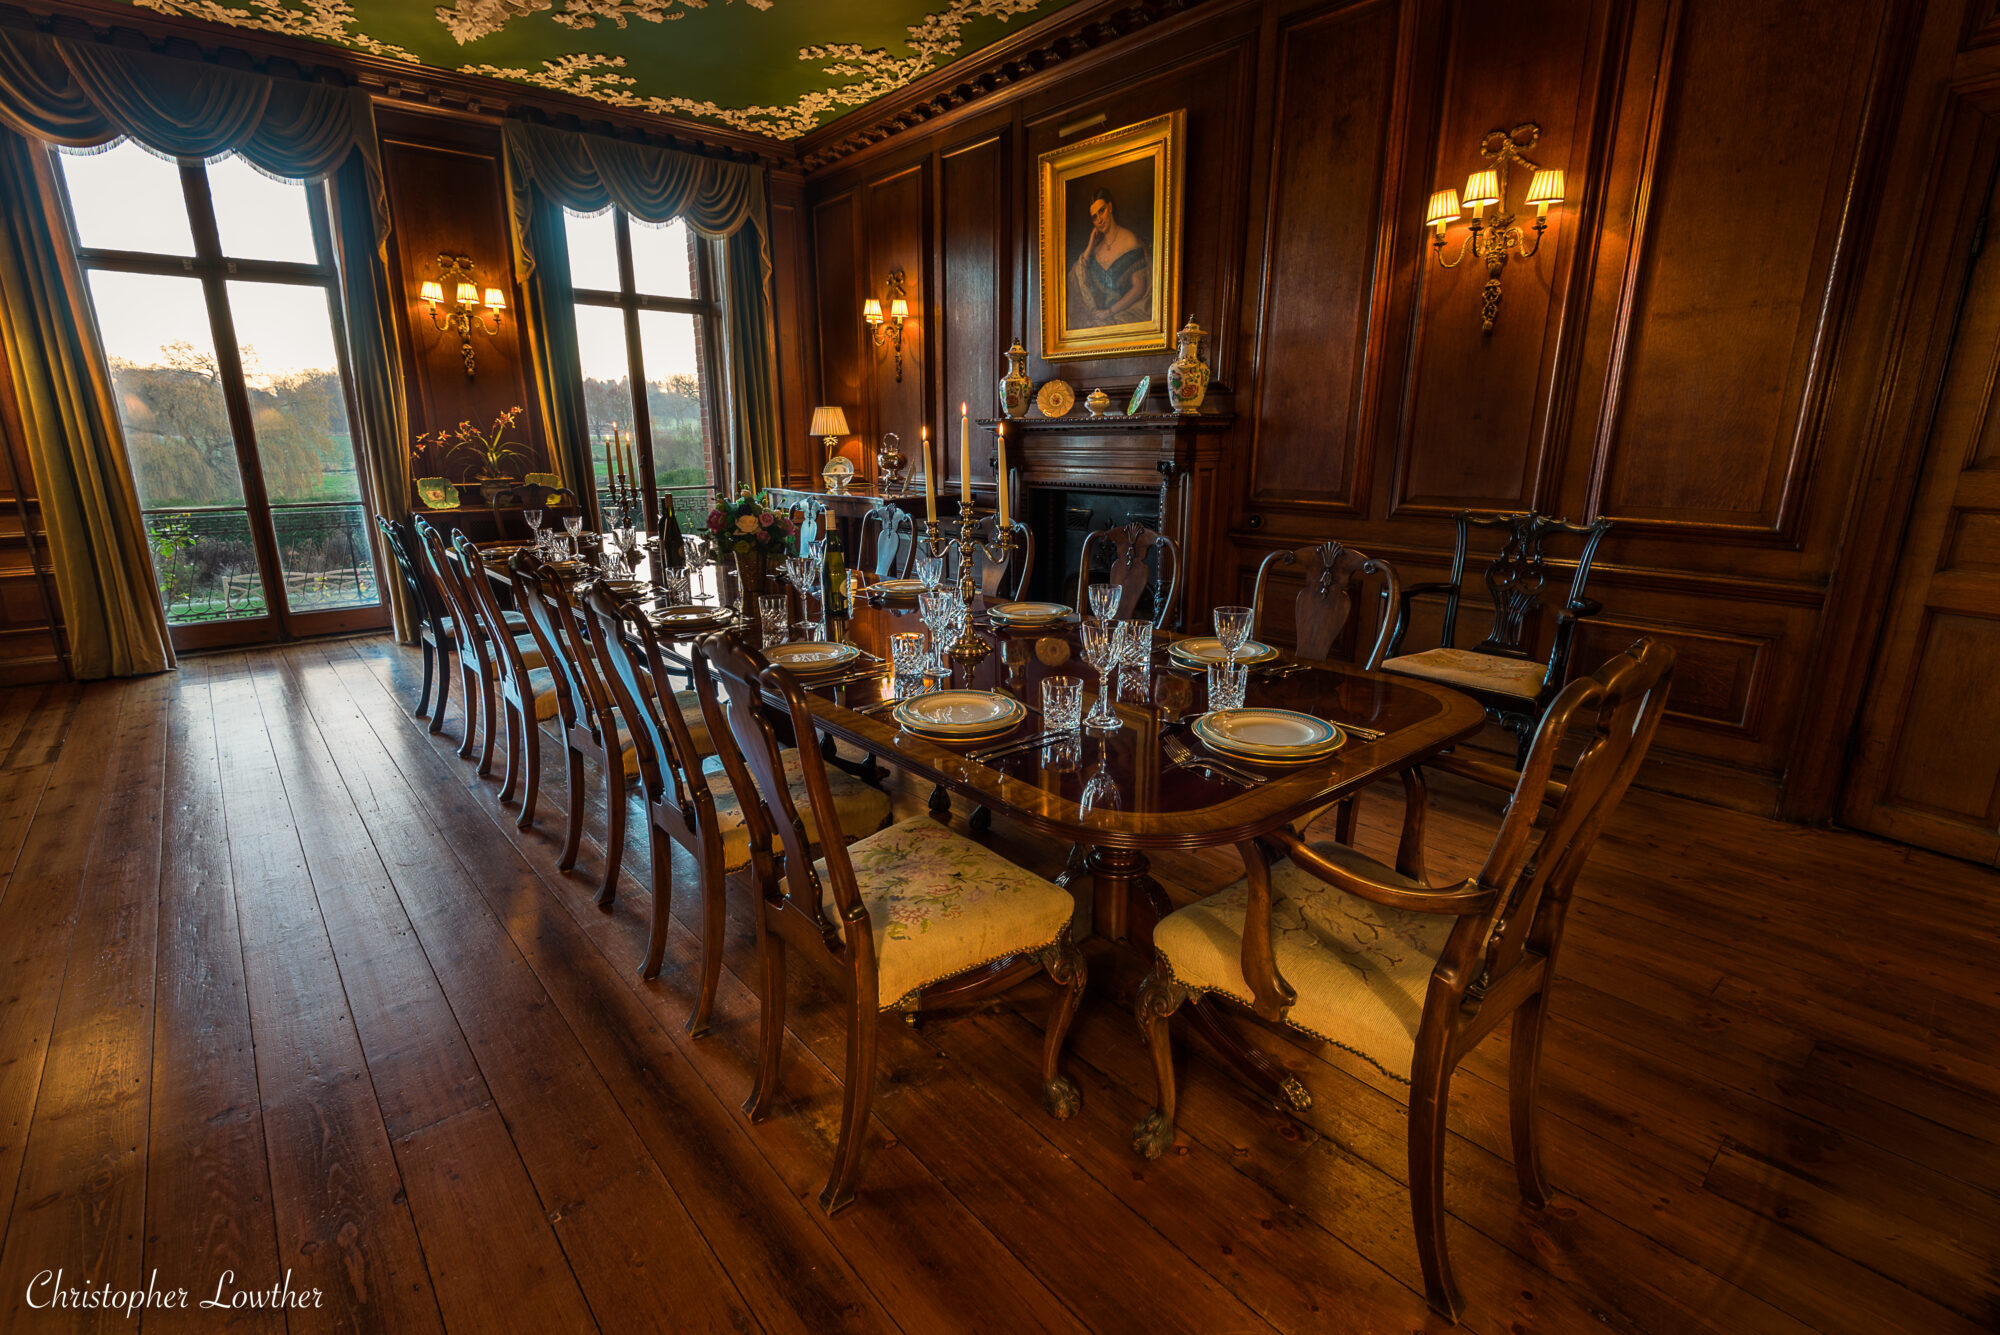 Dining room setting at Ardington House